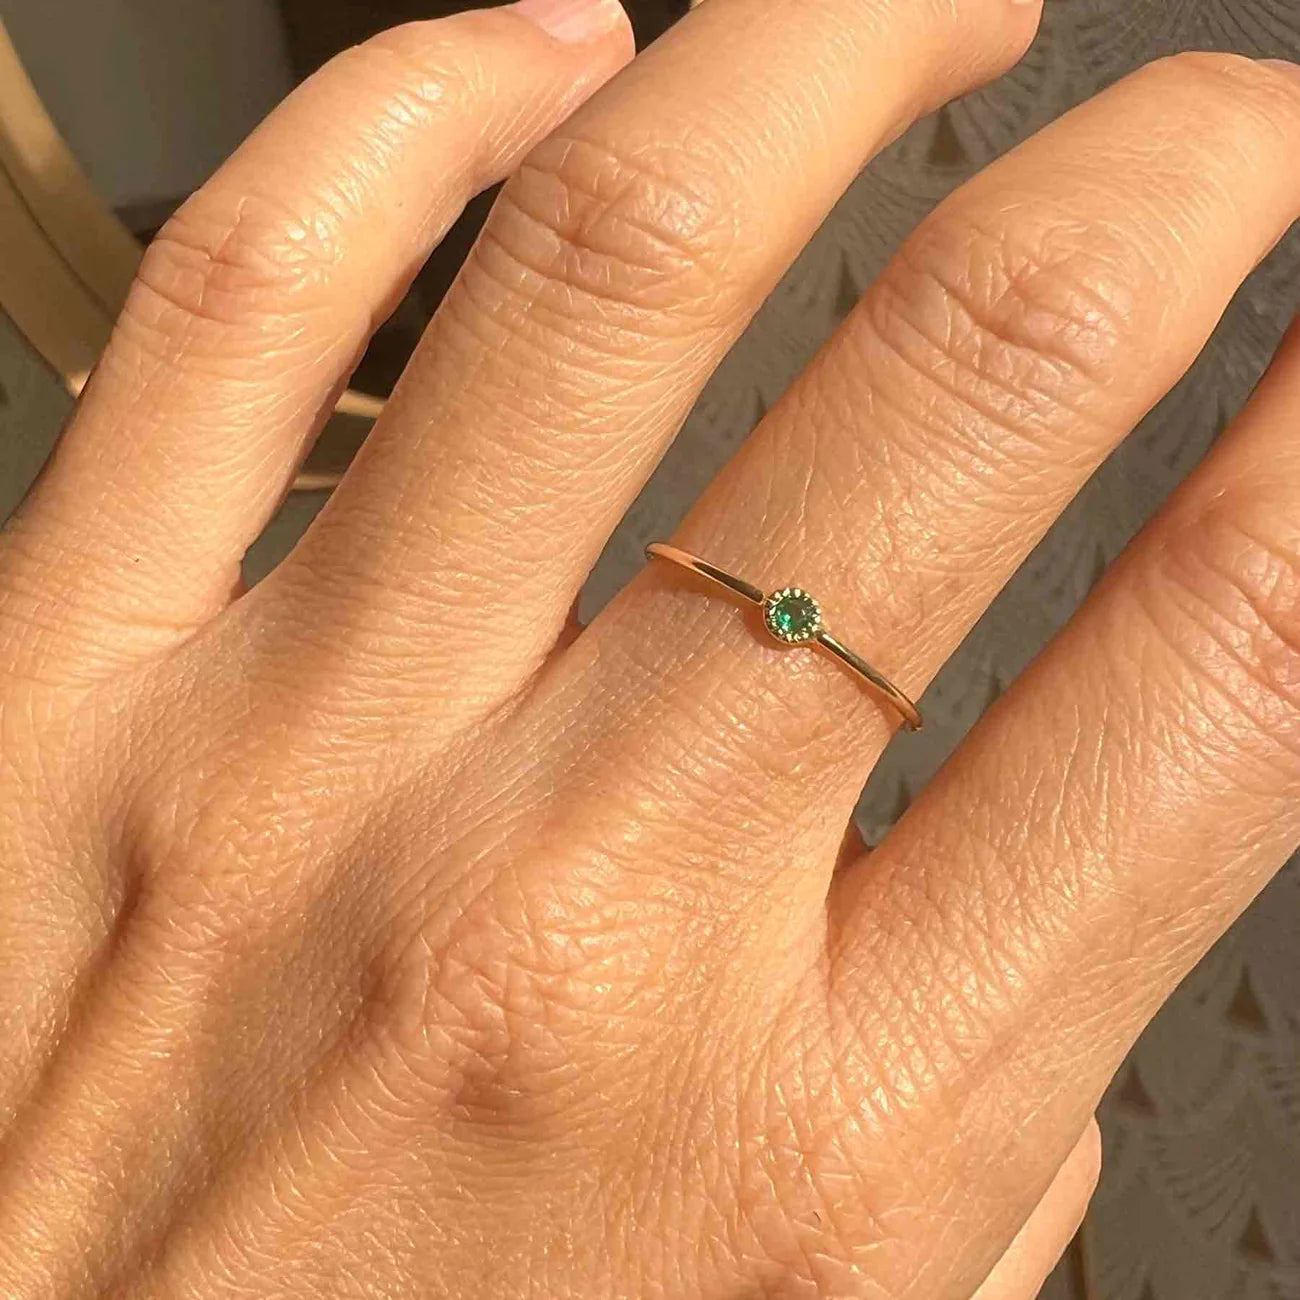 Emerald Ball Ring